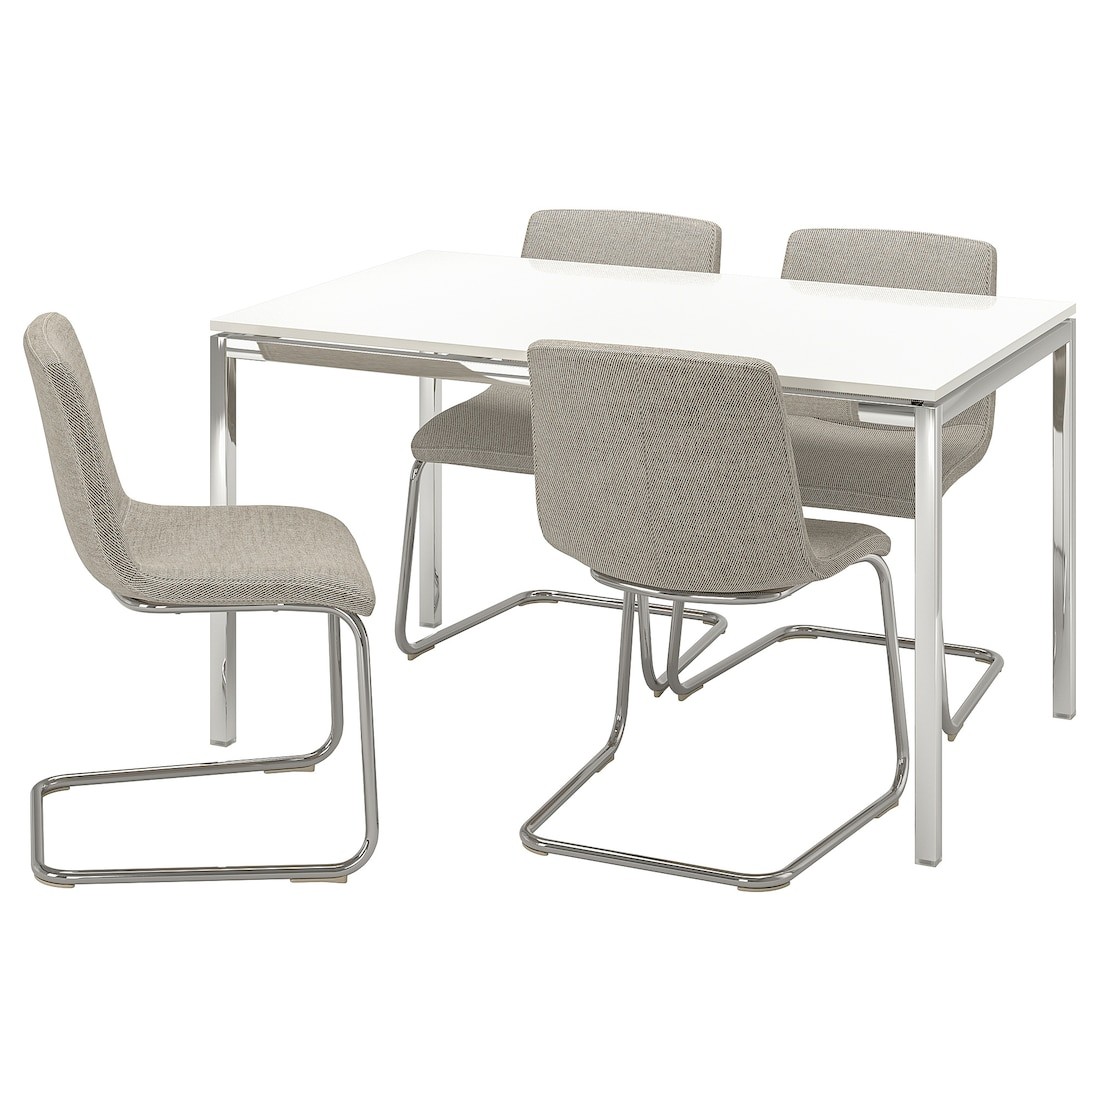 TORSBY / LUSTEBO Стол и 4 стула, глянец / белый хром / Viarp бежевый / коричневый, 135 см